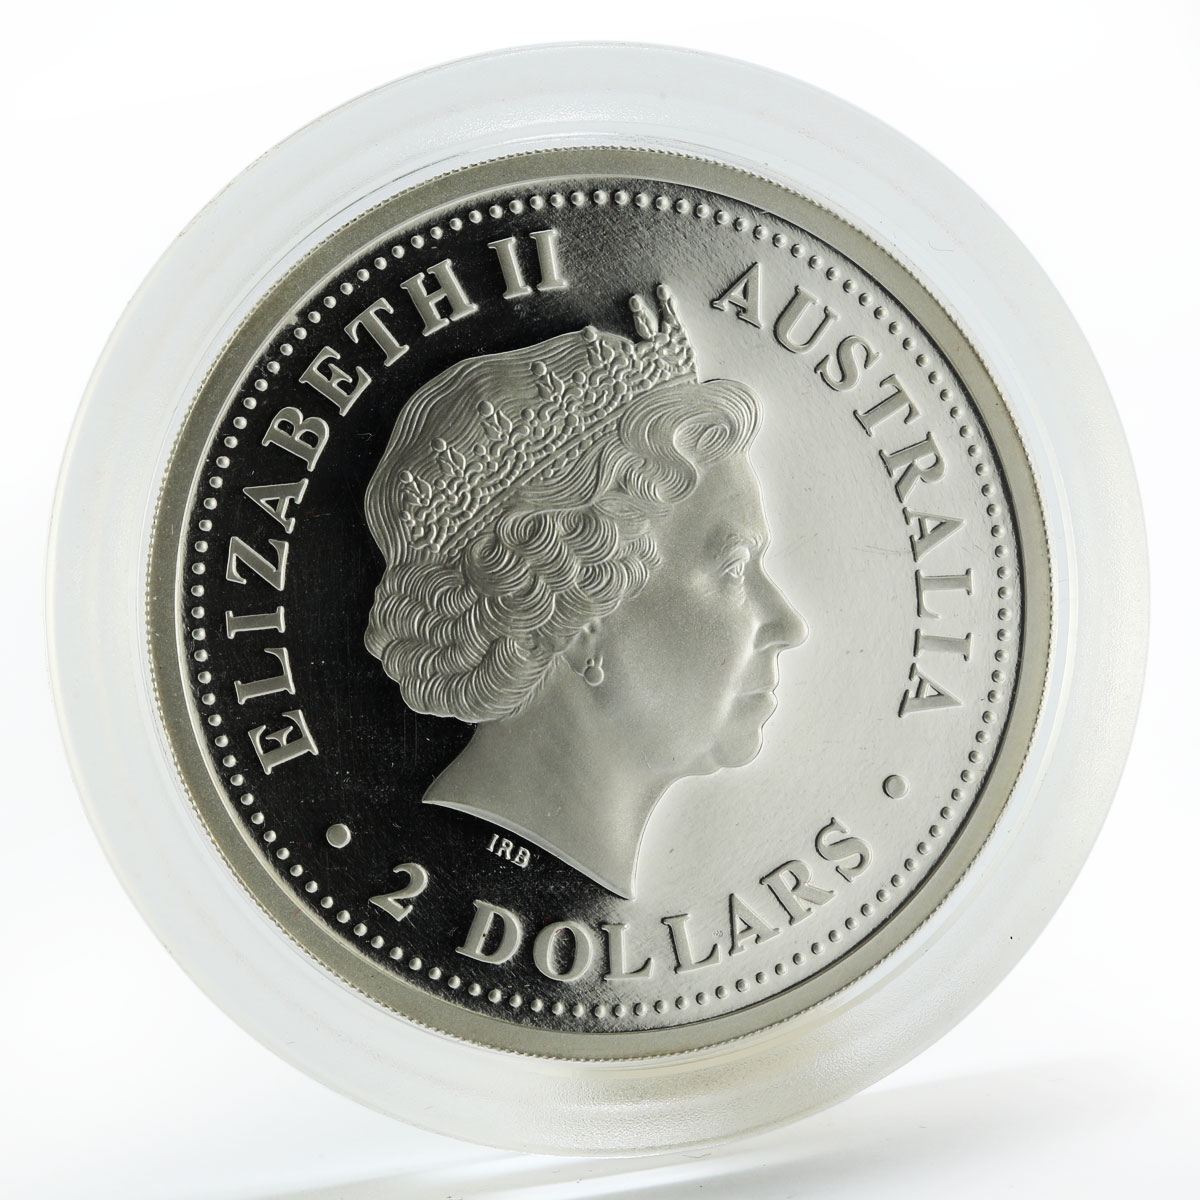 Australia 2 dollars Lunar Year Series I Year Dog silver proof coin 2006